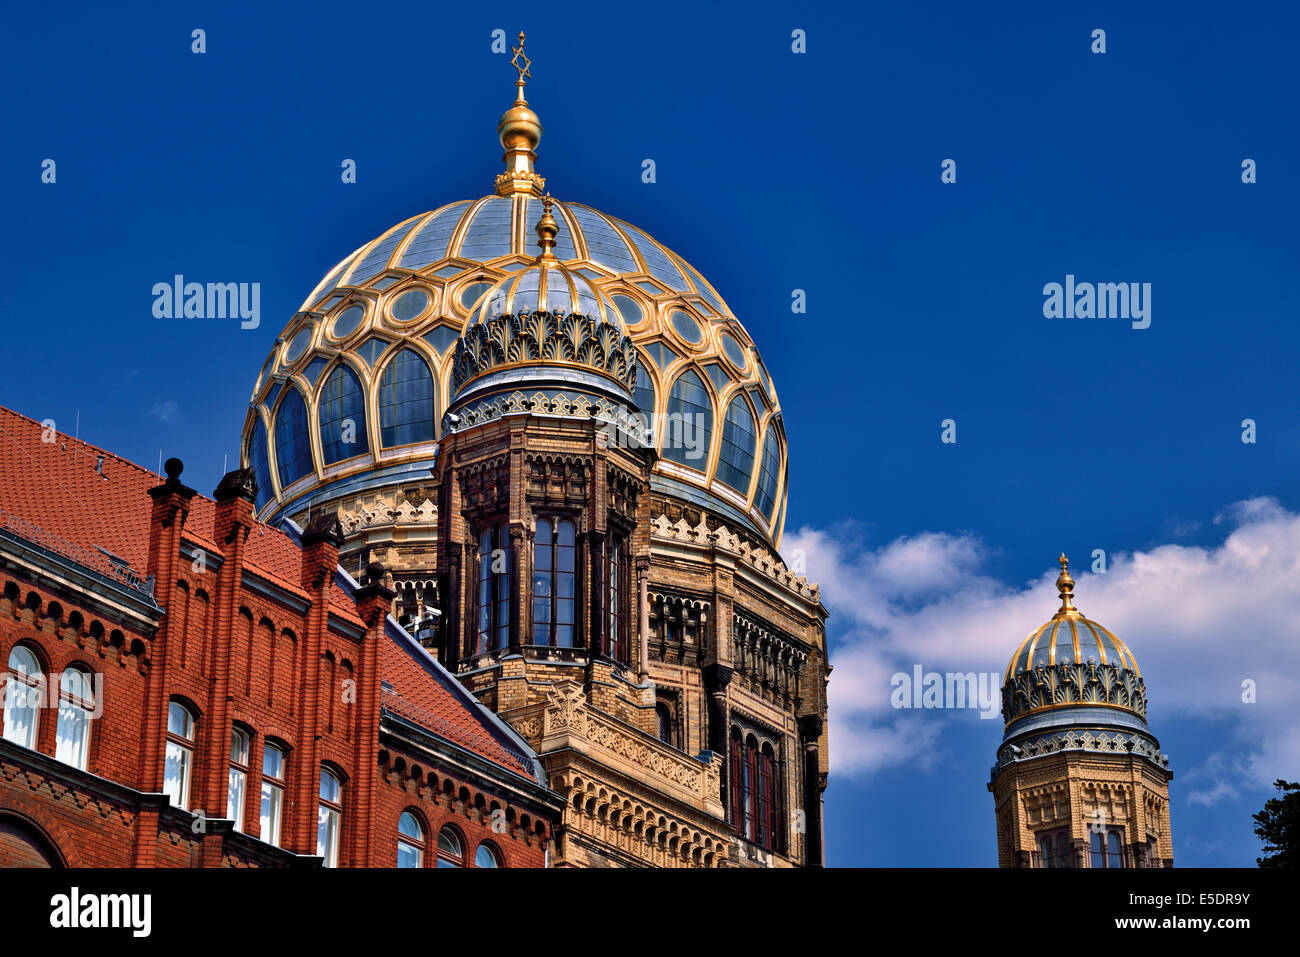 Alemania, Berlín: la cúpula dorada de la nueva sinagoga Foto de stock